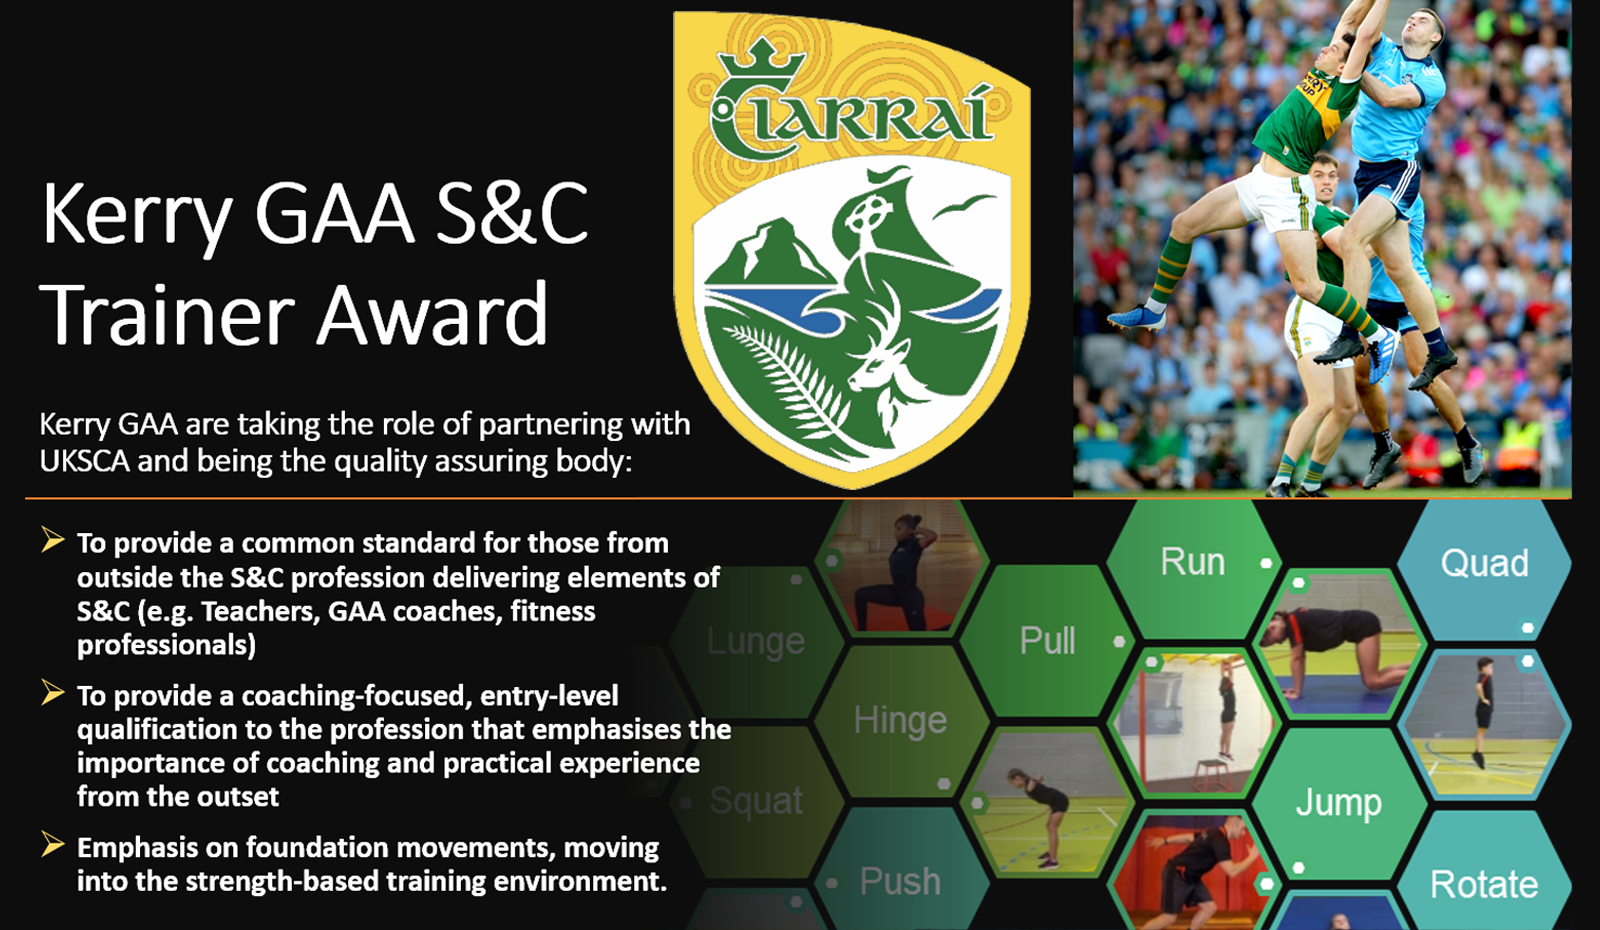 Kerry GAA S&C Trainer Award